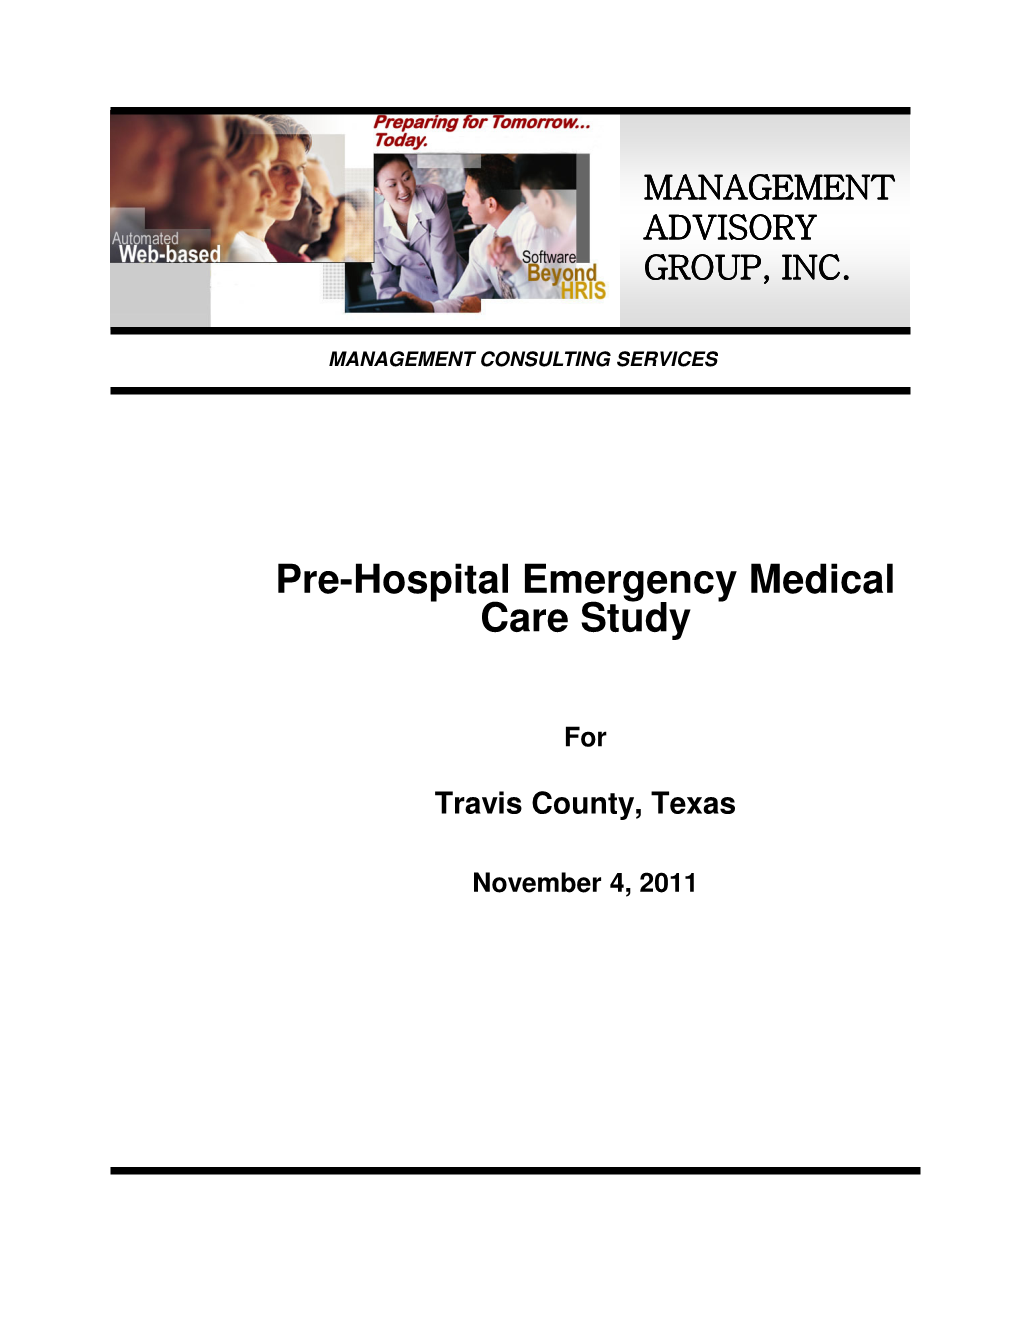 Pre-Hospital Emergency Medical Care Study